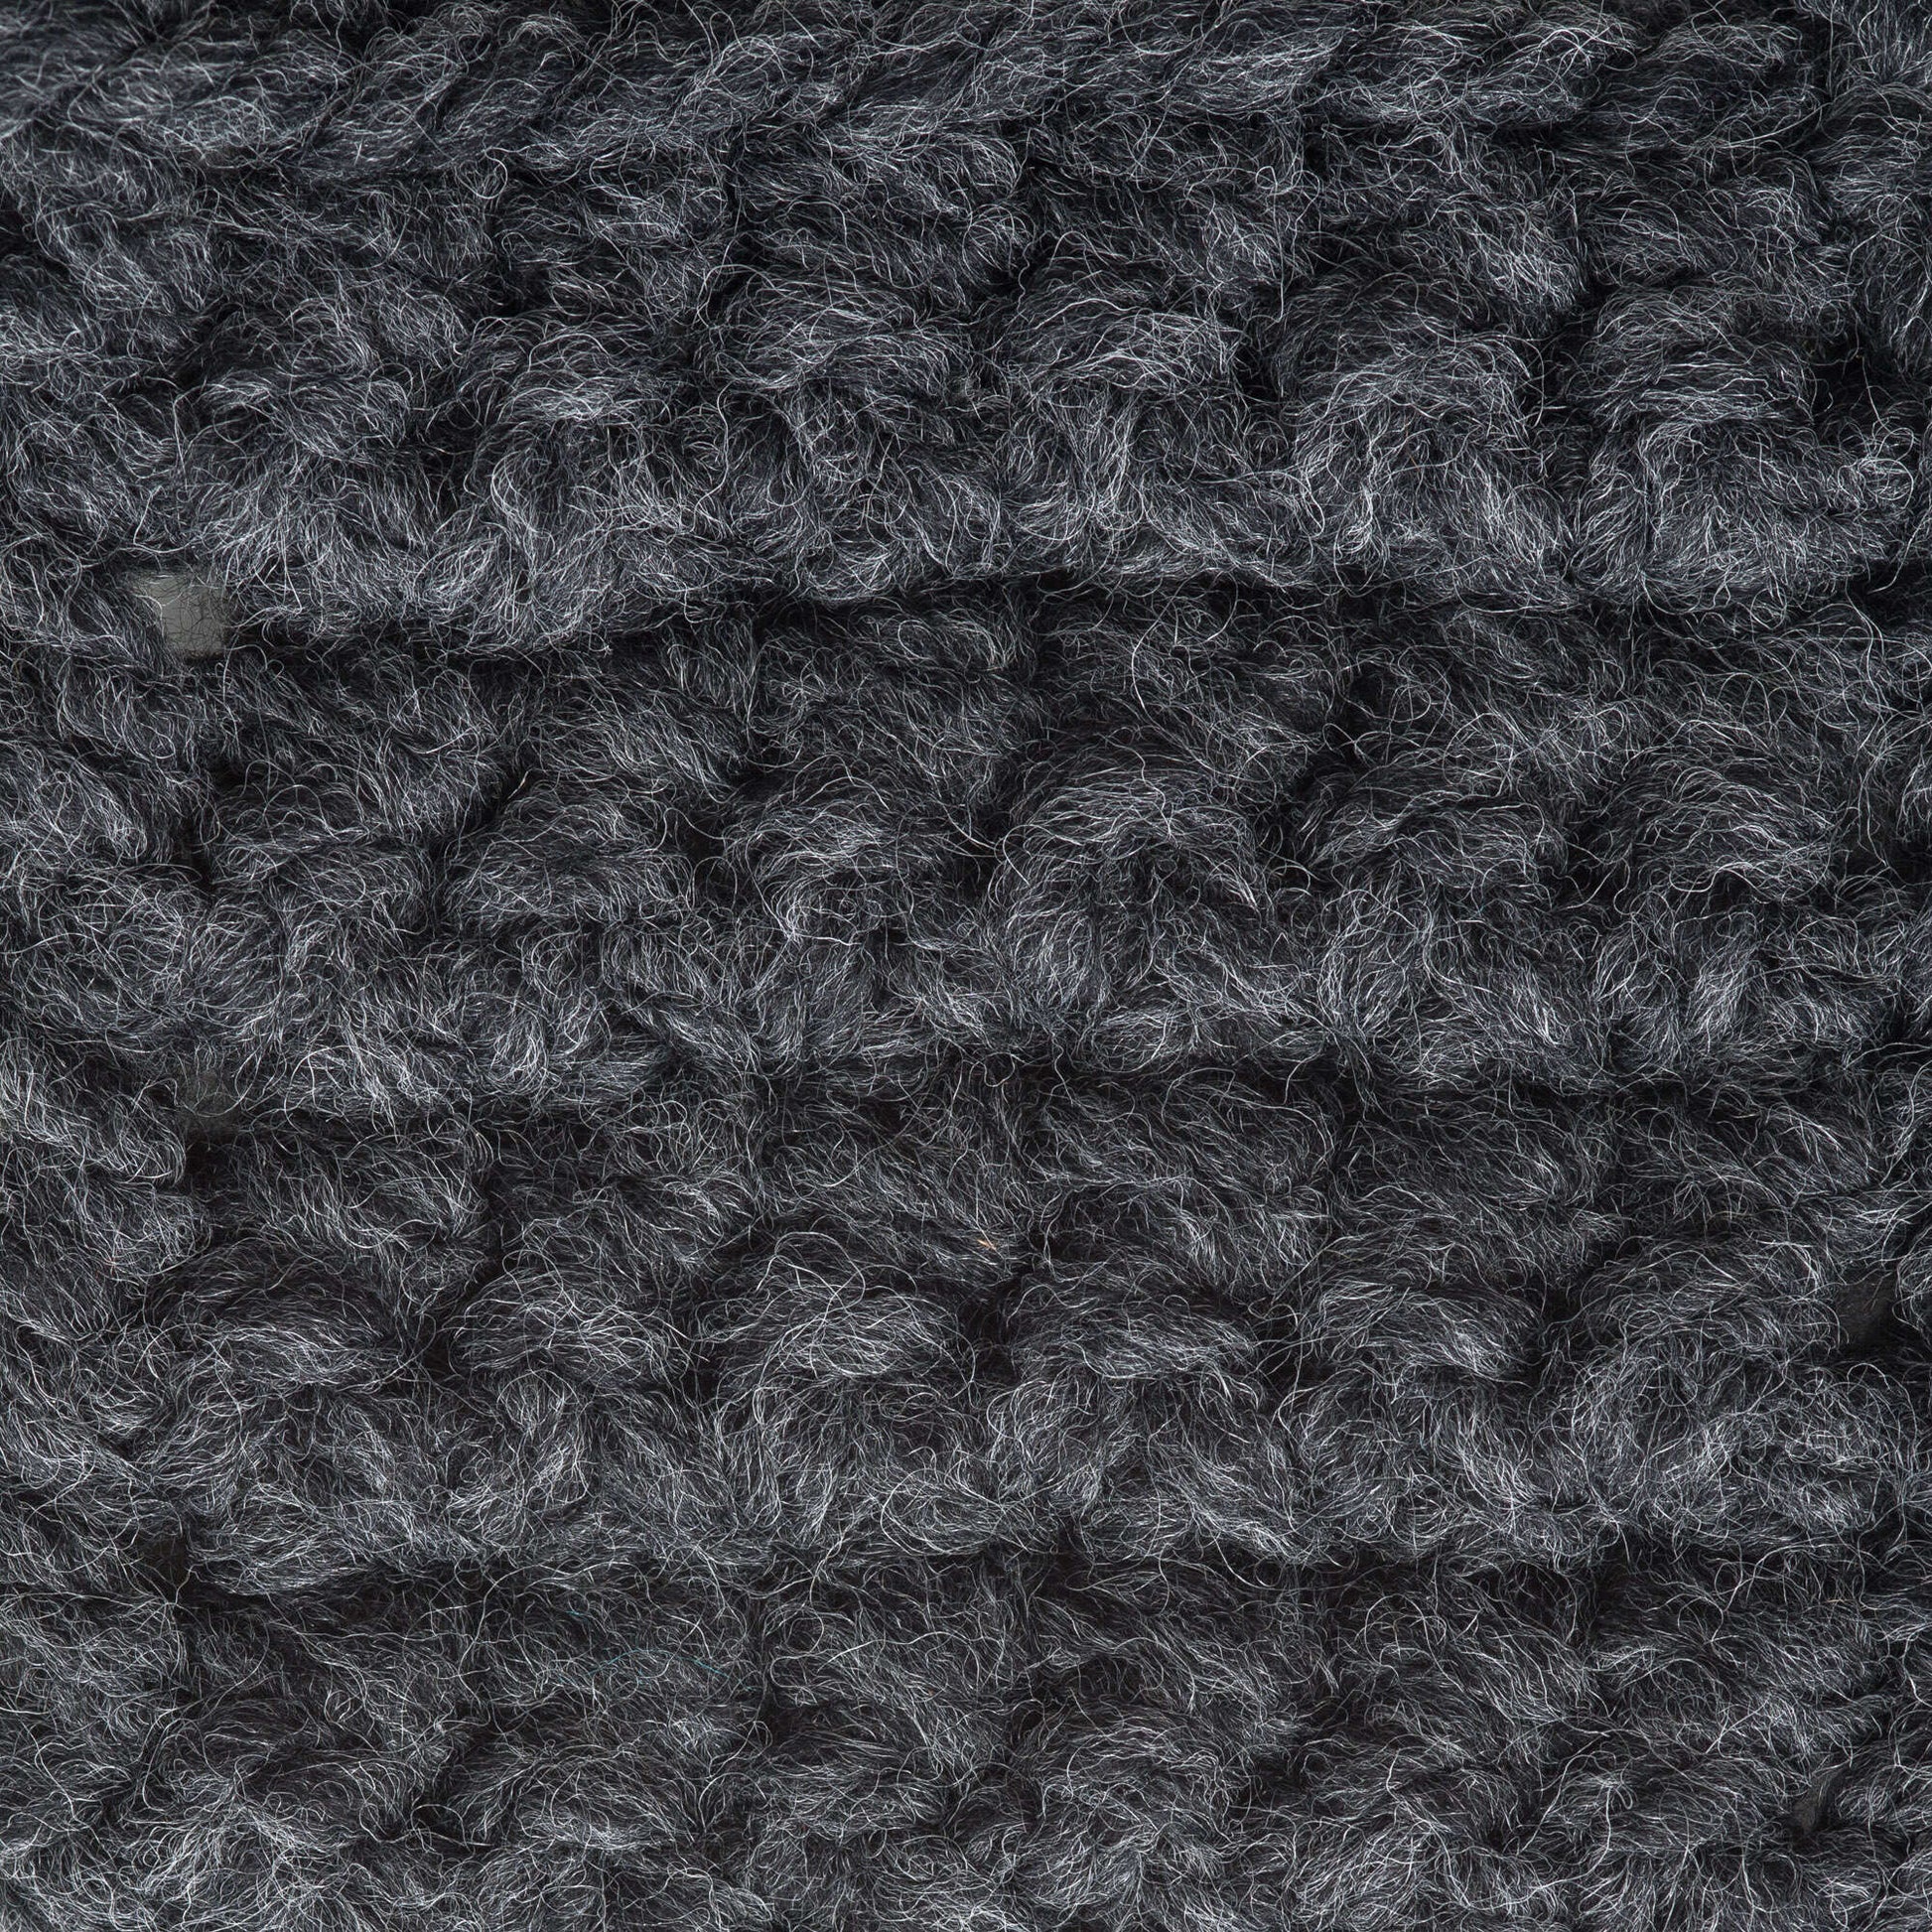 019 - Gordita dark brown chunky ecological merino wool